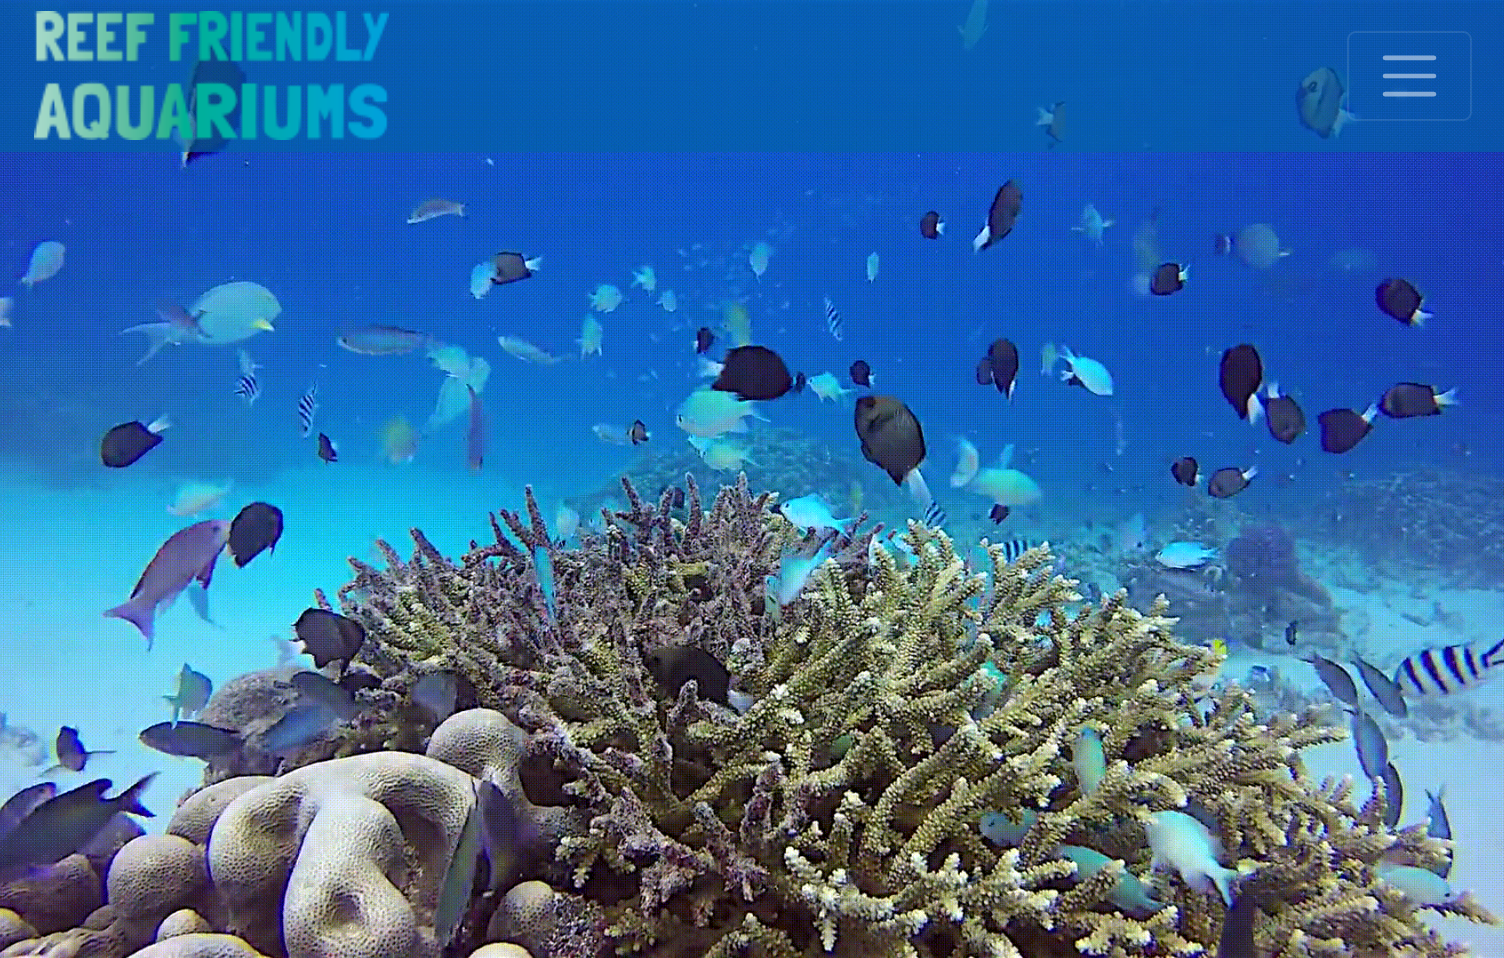 Fish swimming around coral reef